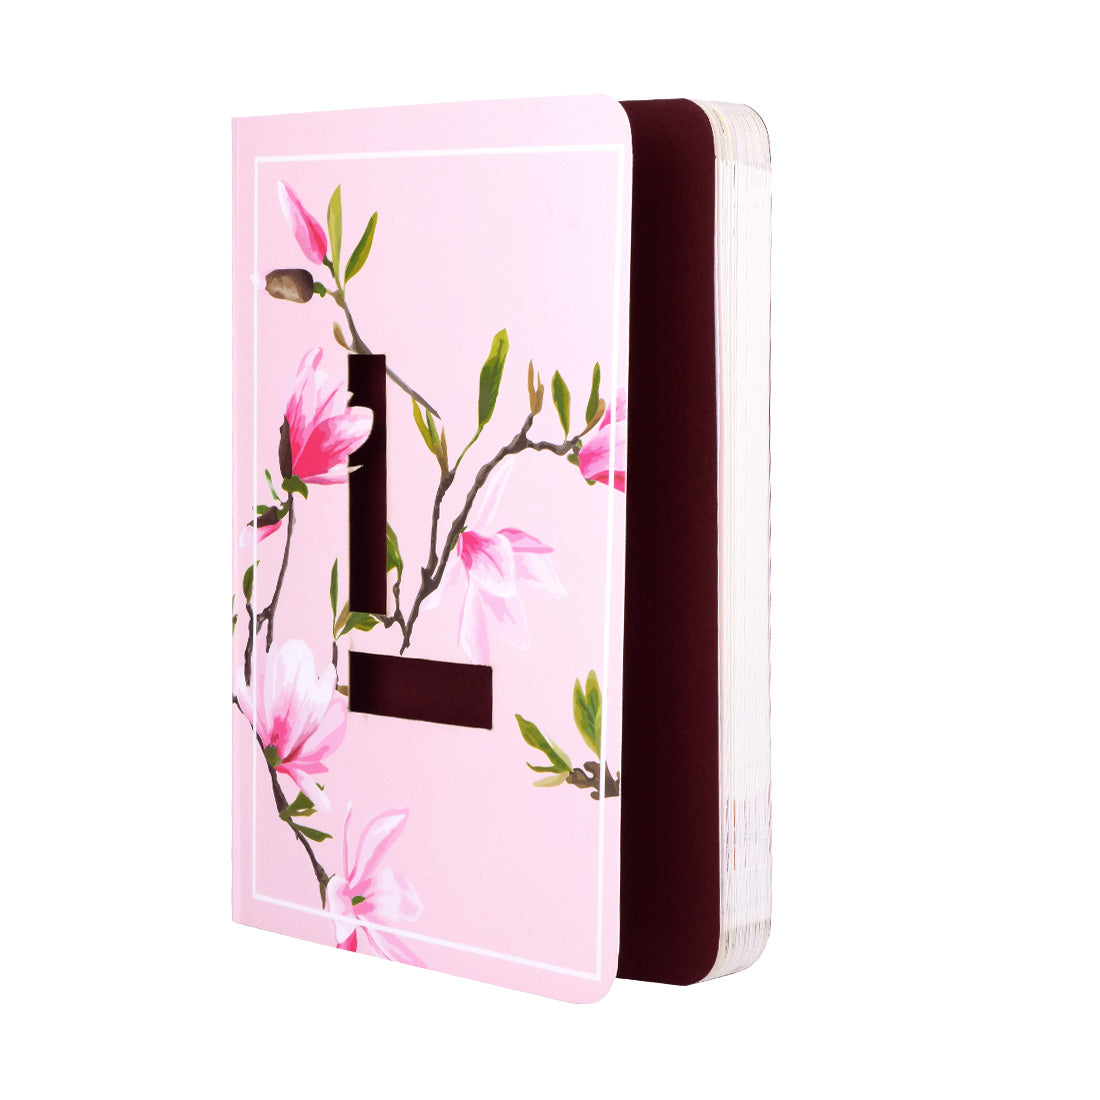 Initial L - Floral Monogram notebook